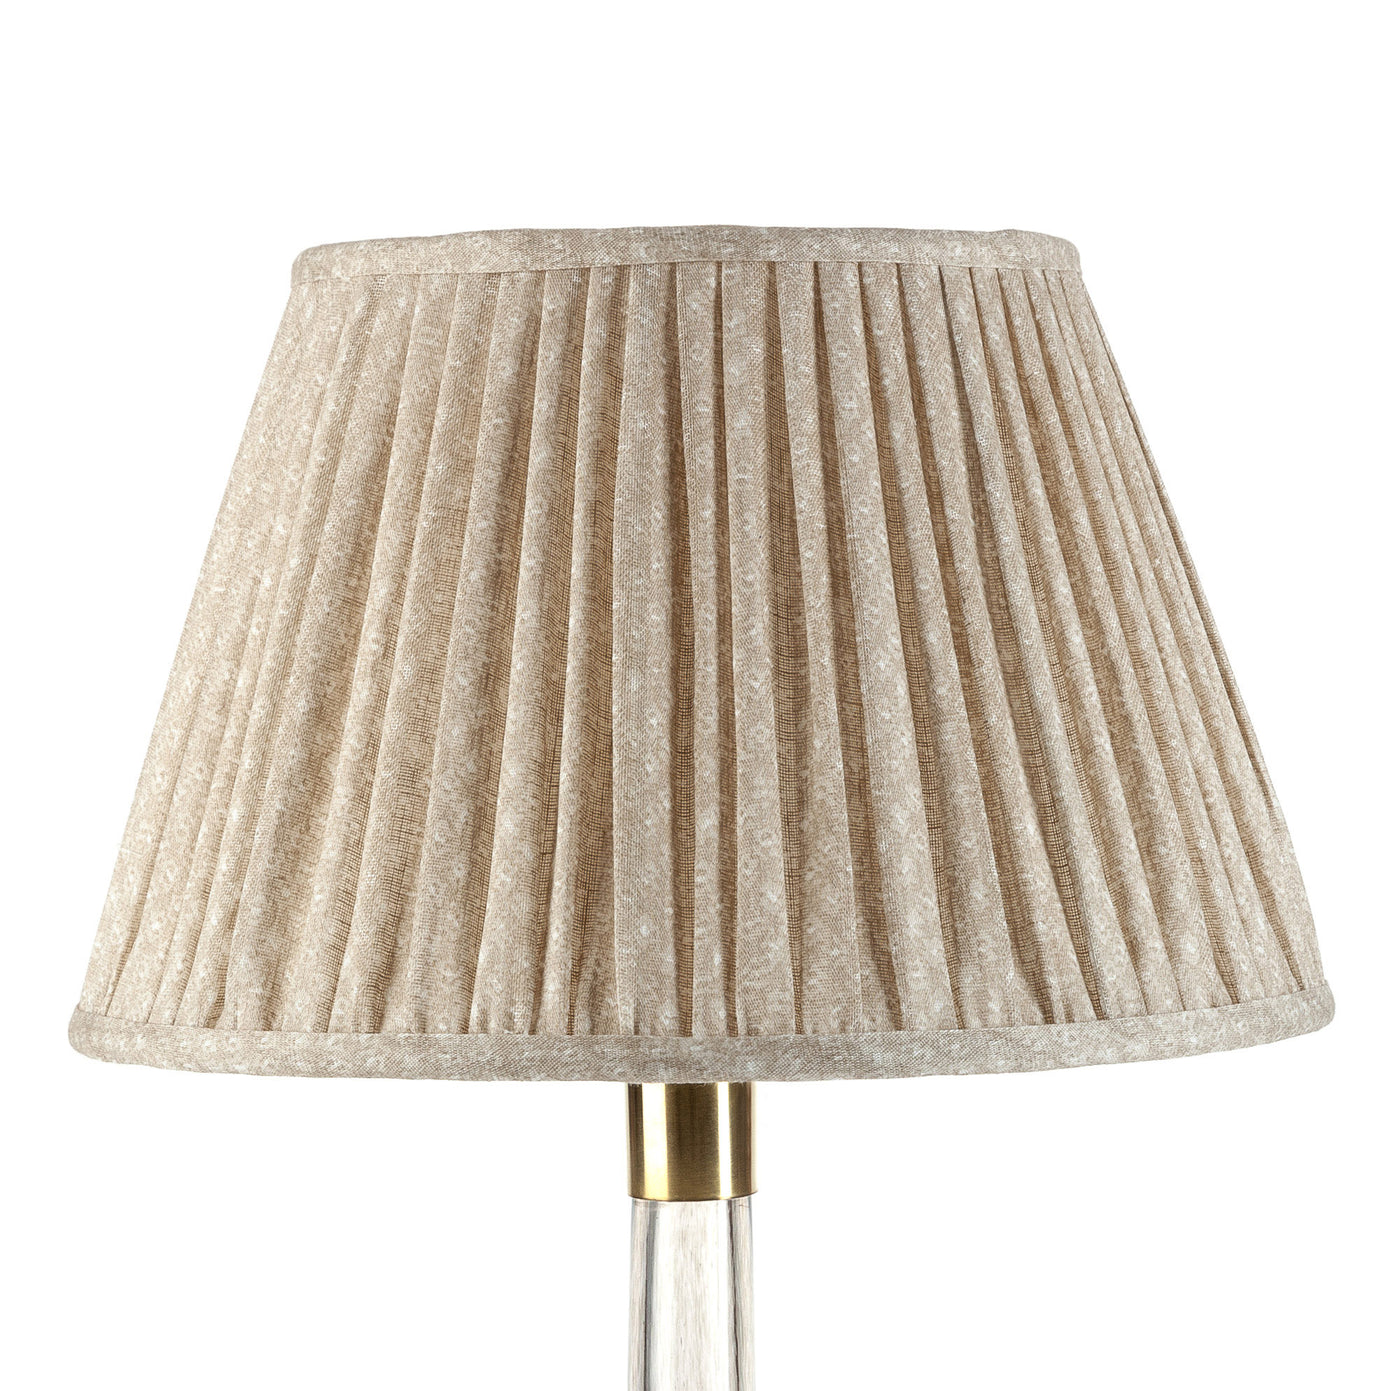 12" Fermoie Lampshade - Figured Linen in Ecru  | Newport Lamp And Shade | Located in Newport, RI